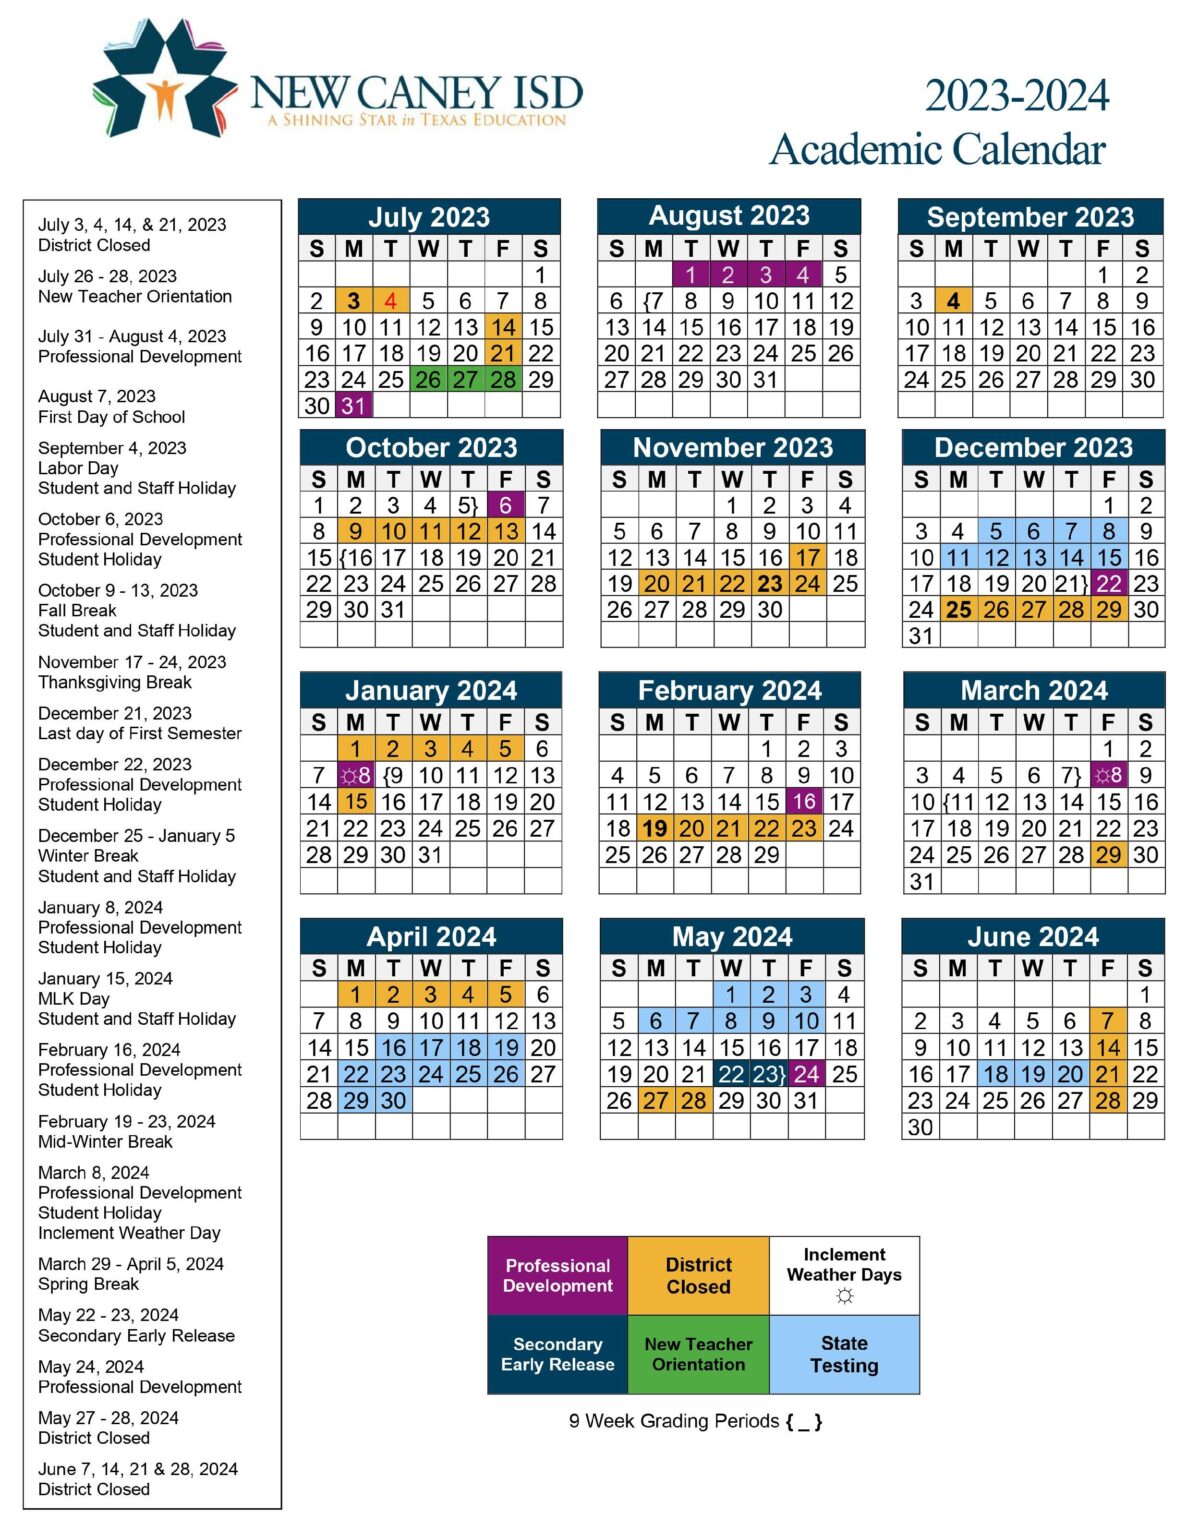 New Caney Independent School District Calendar 2023-2024 PDF